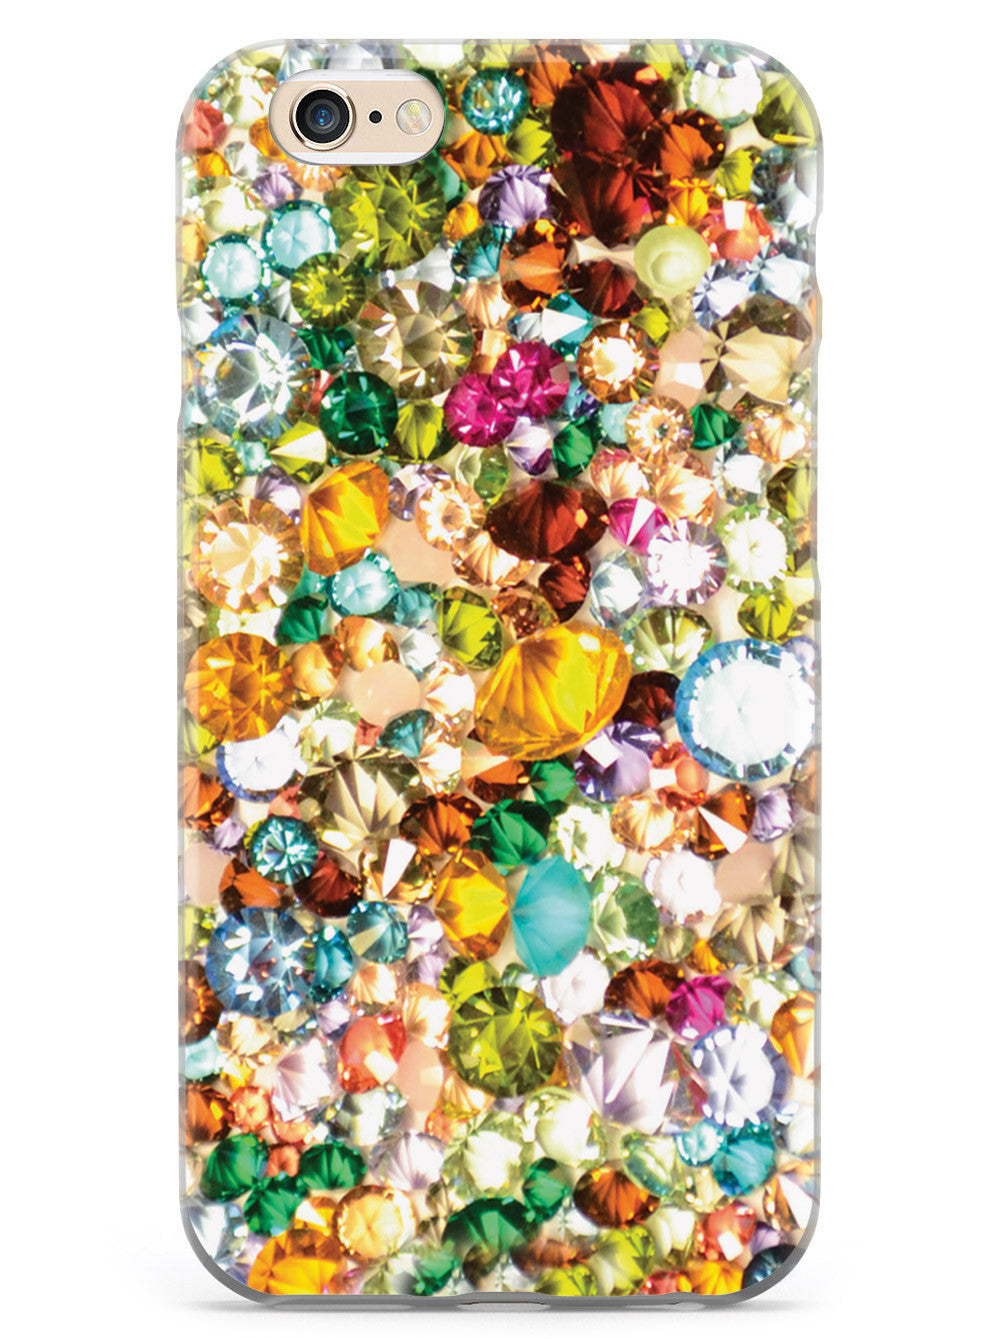 Colorful Bling - Shiny Case